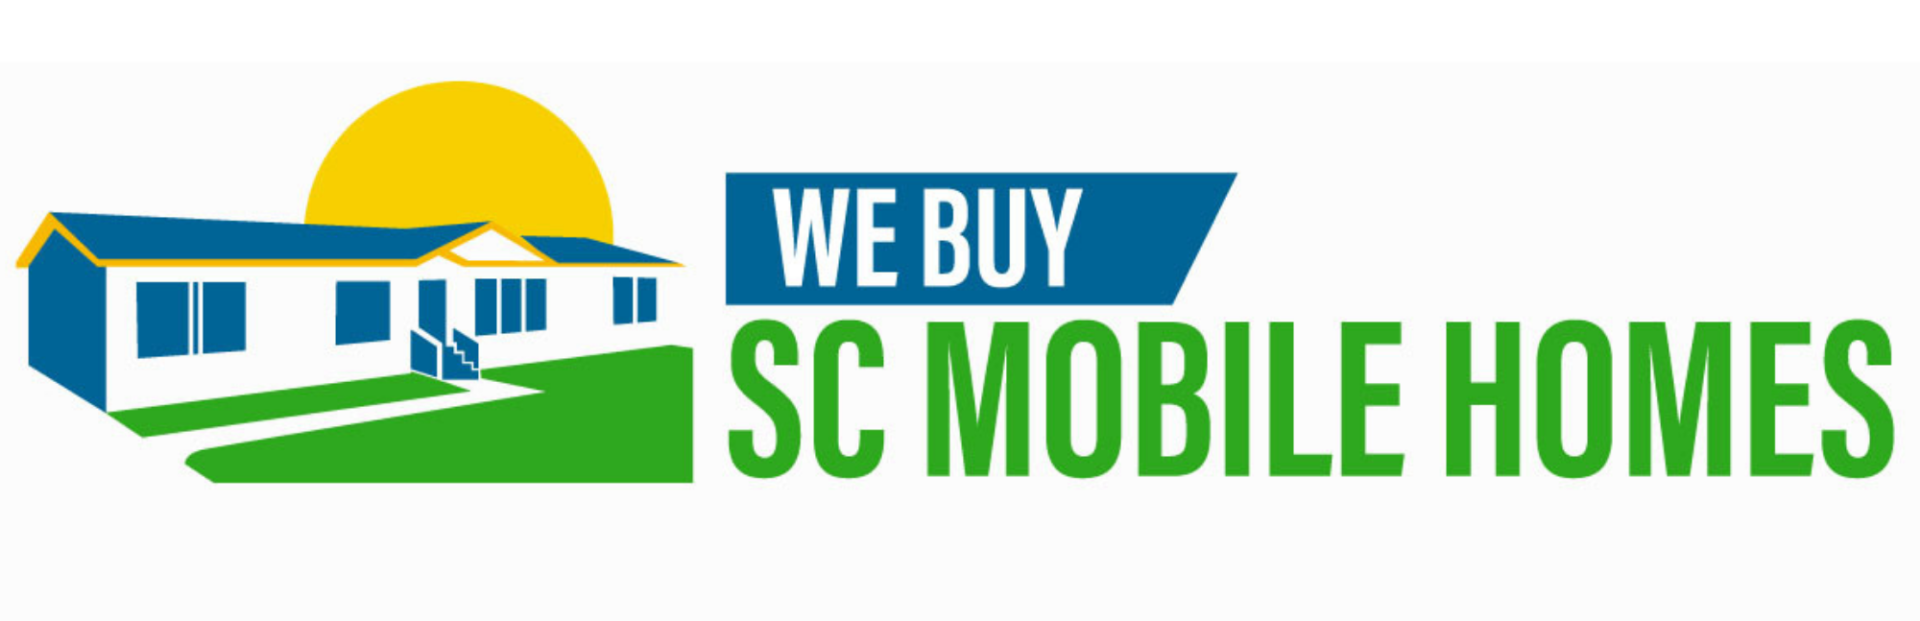 We Buy SC Mobile Homes logo